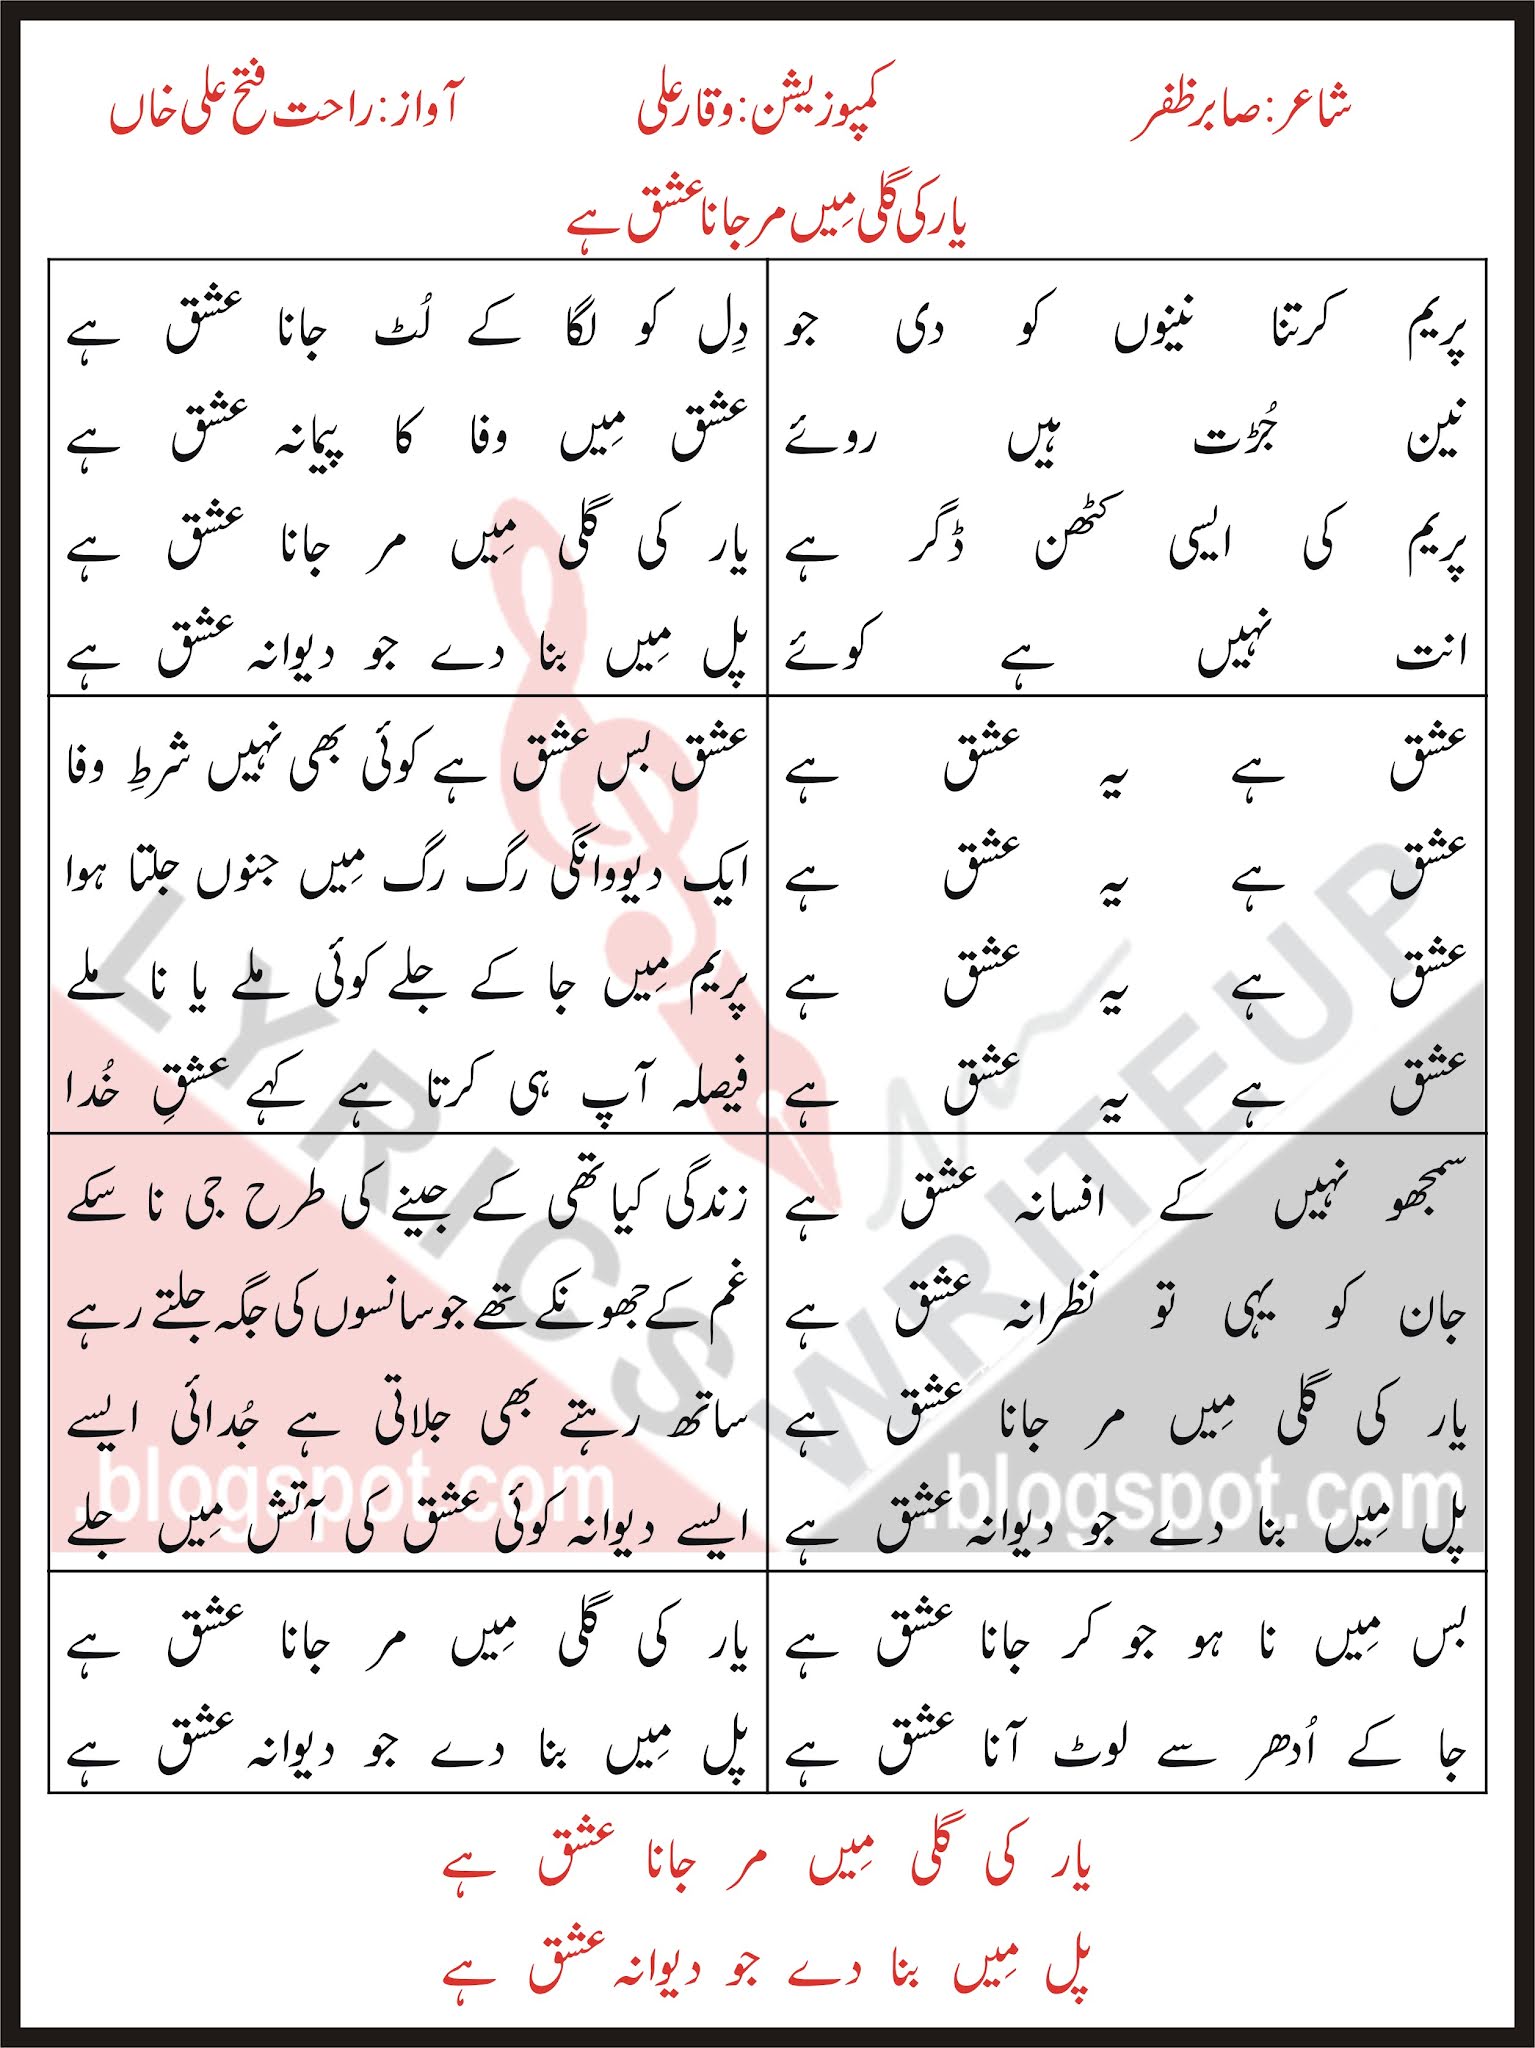 Ishq Hai OST Lyrics in Urdu and Roman Urdu